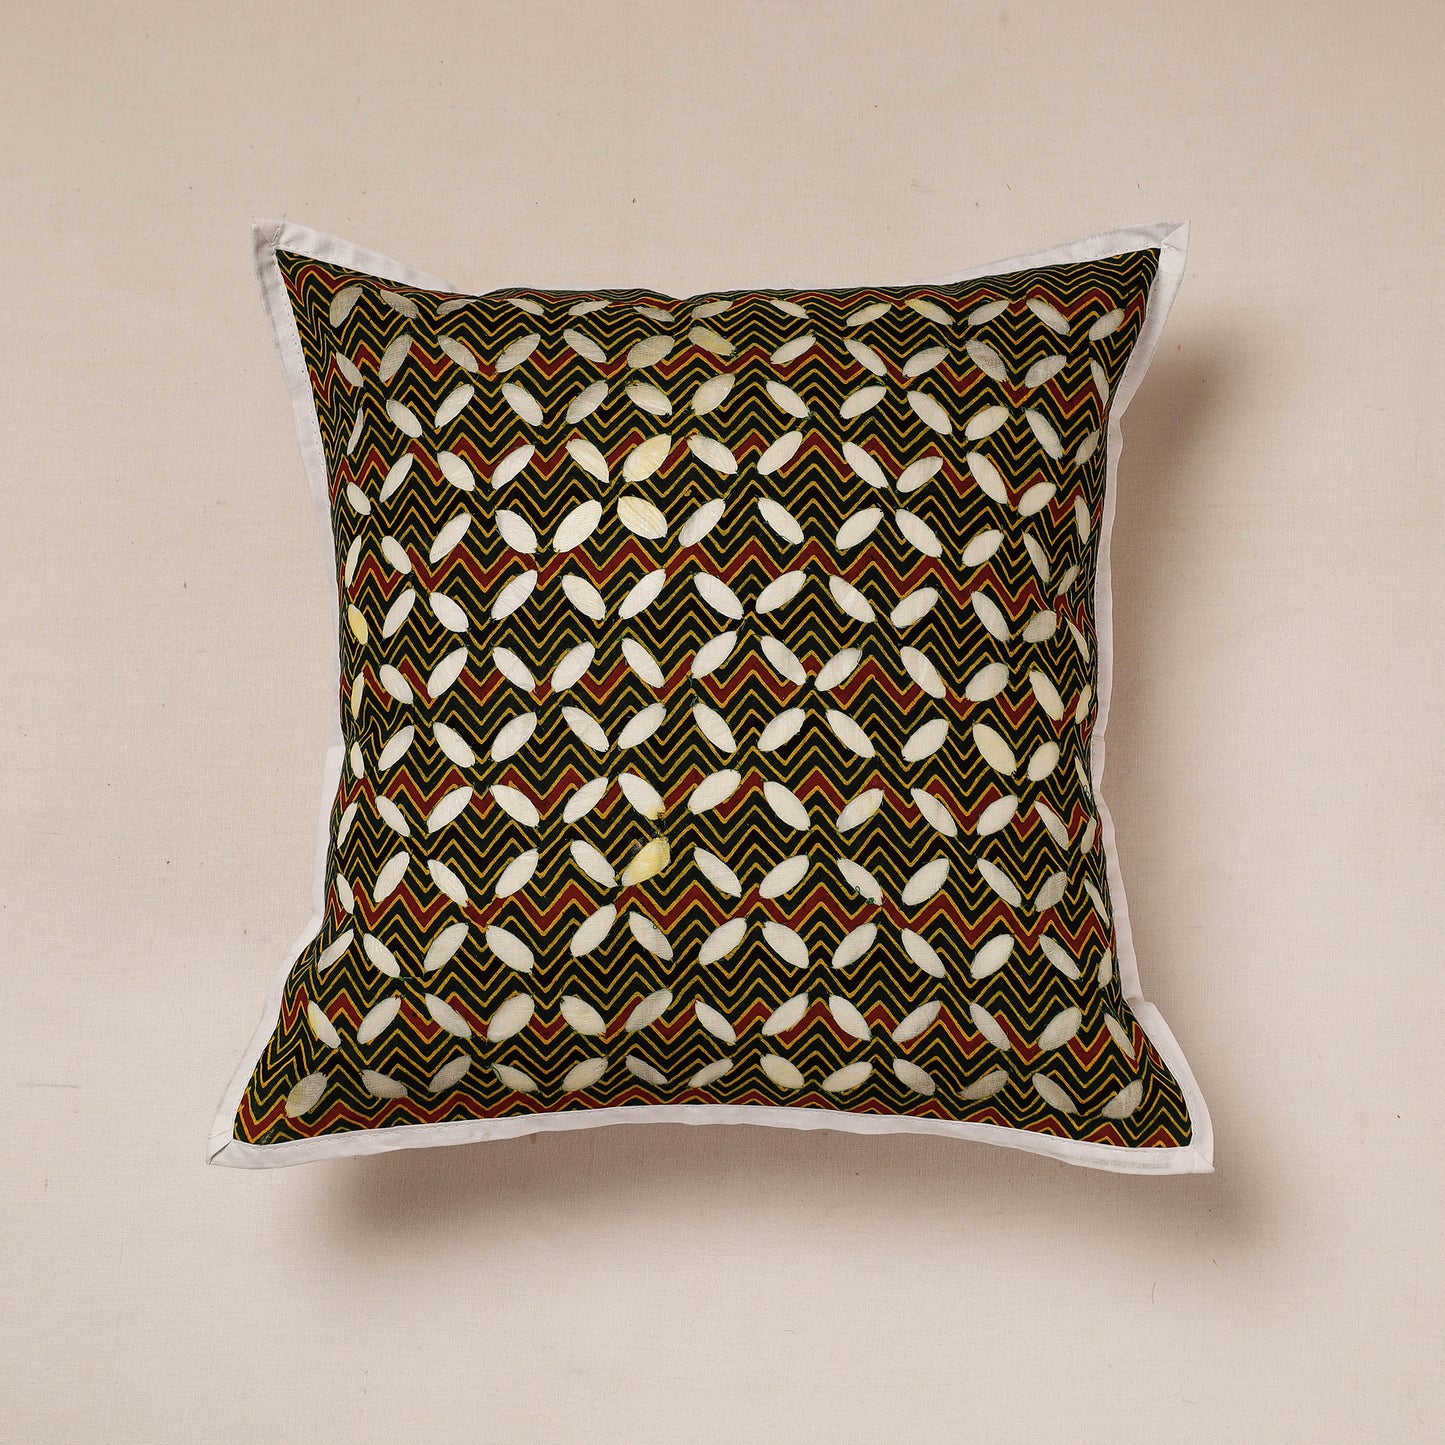 Green - Applique Cut Work Cotton Cushion Cover (16 x 16 in)